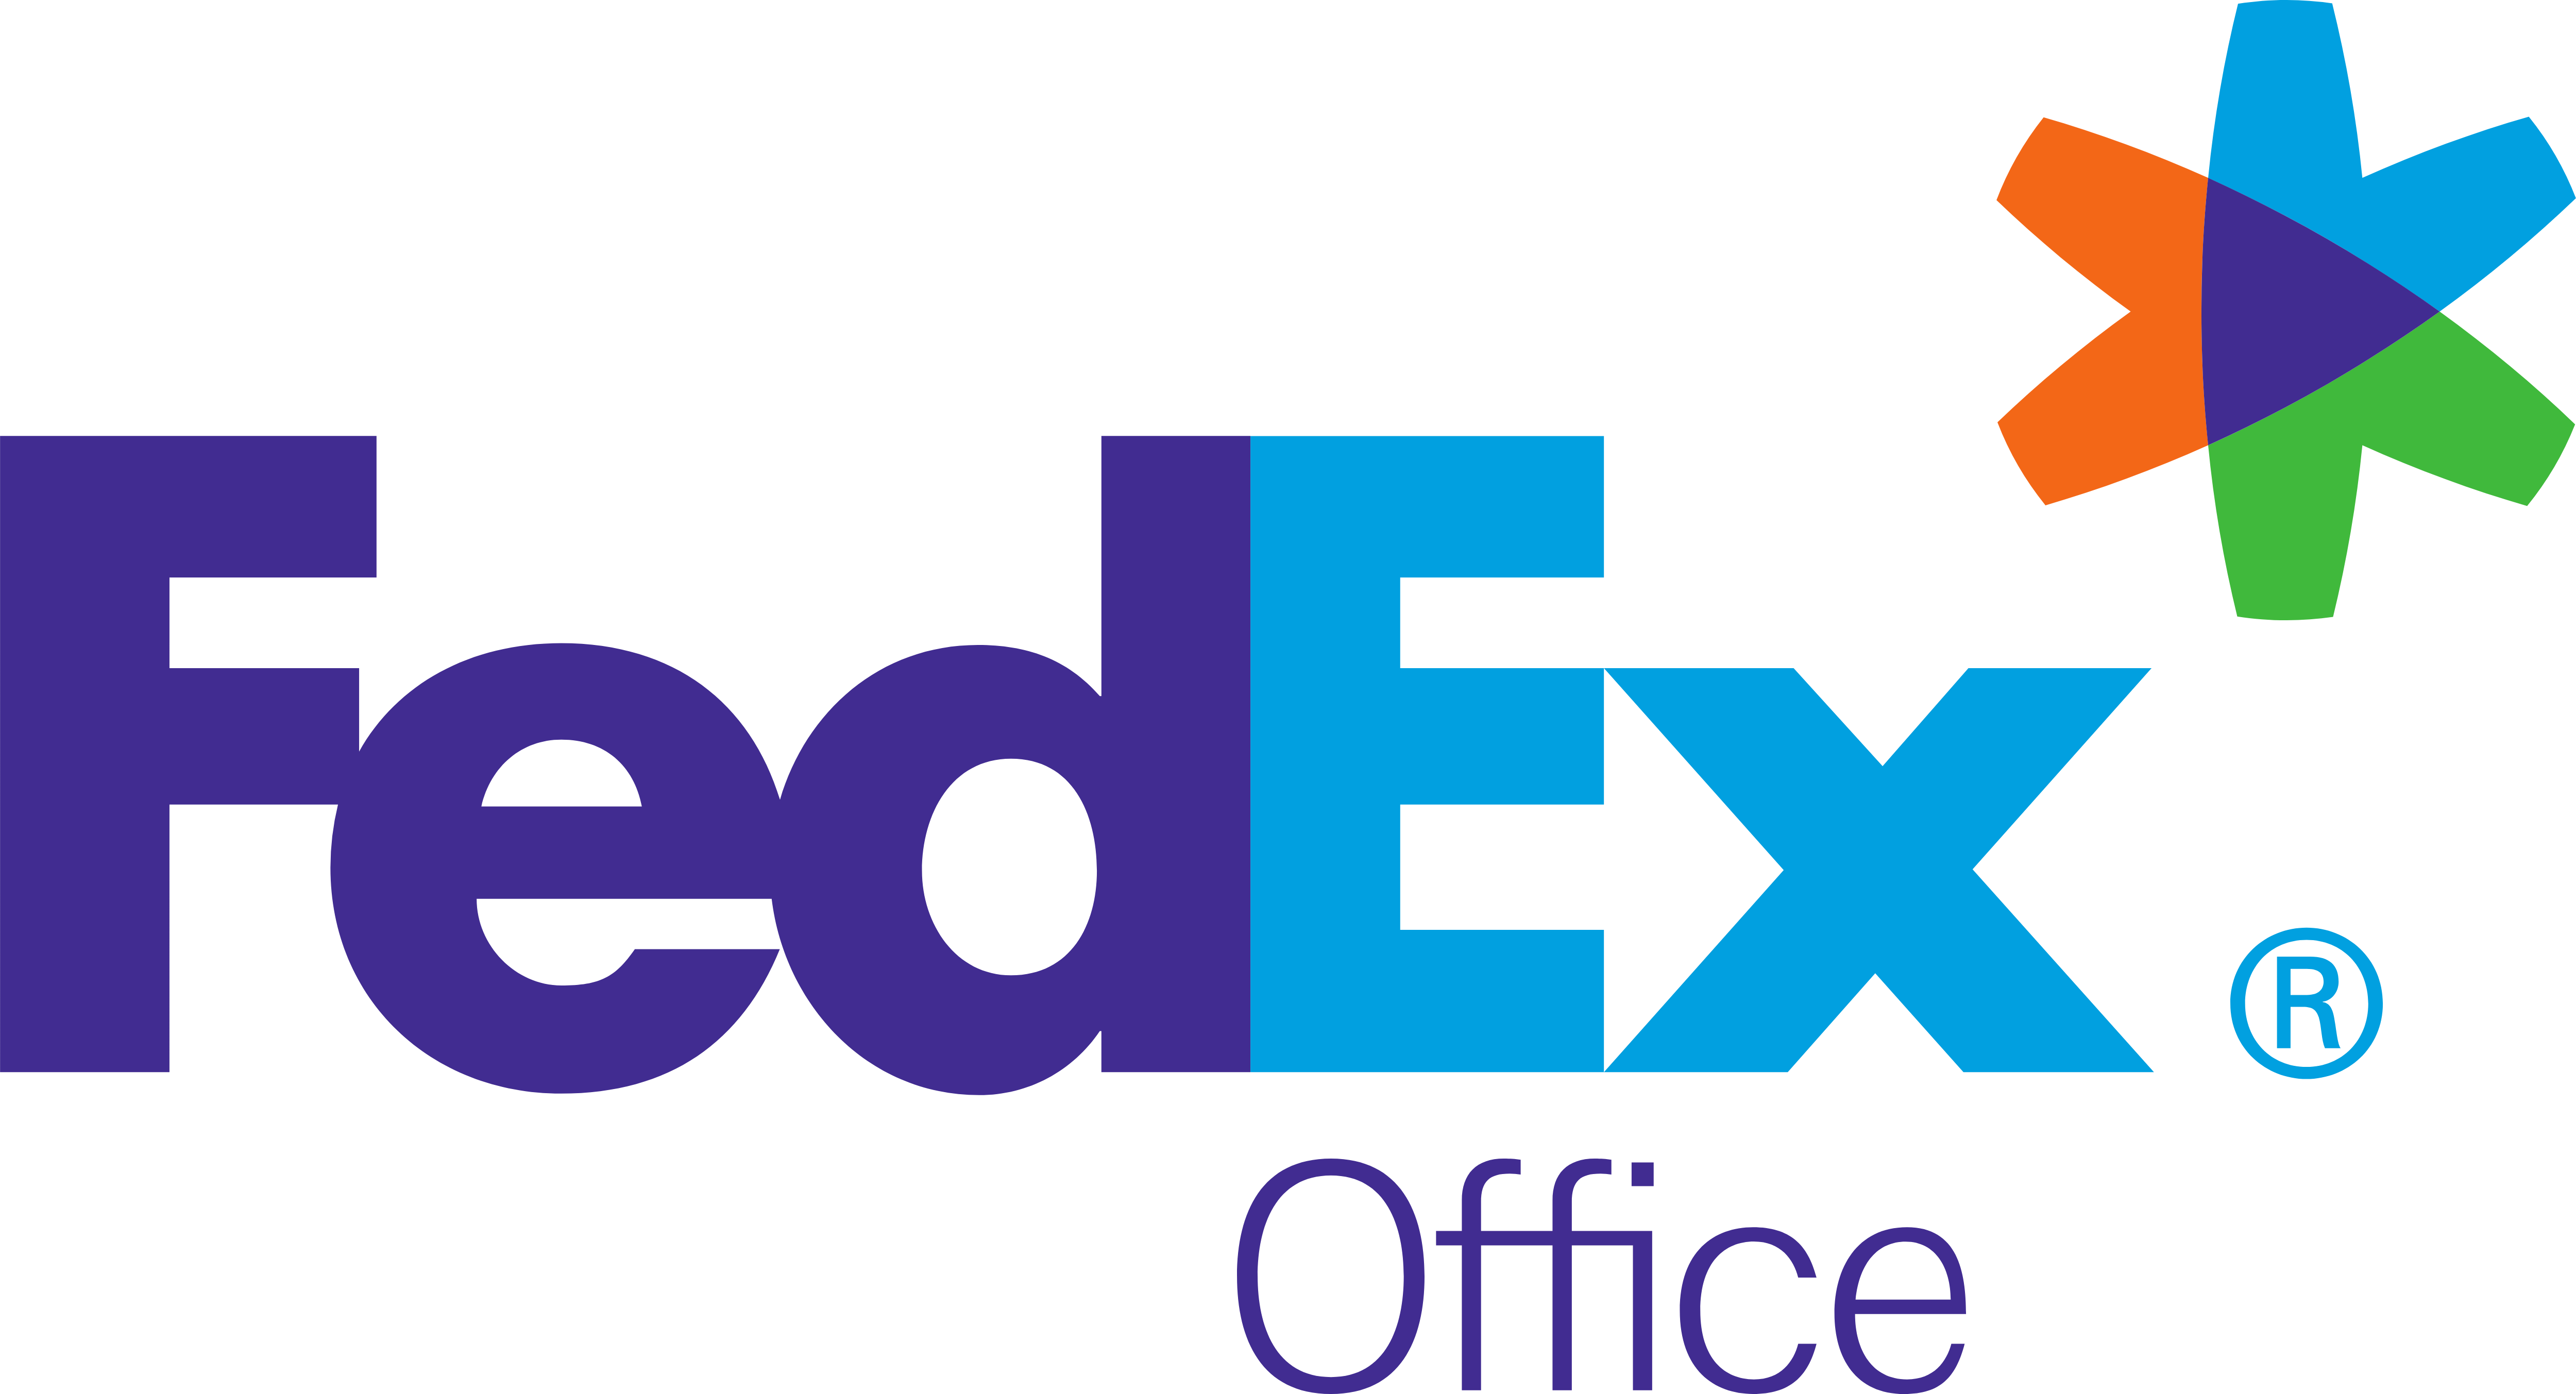 fedex-logos-download